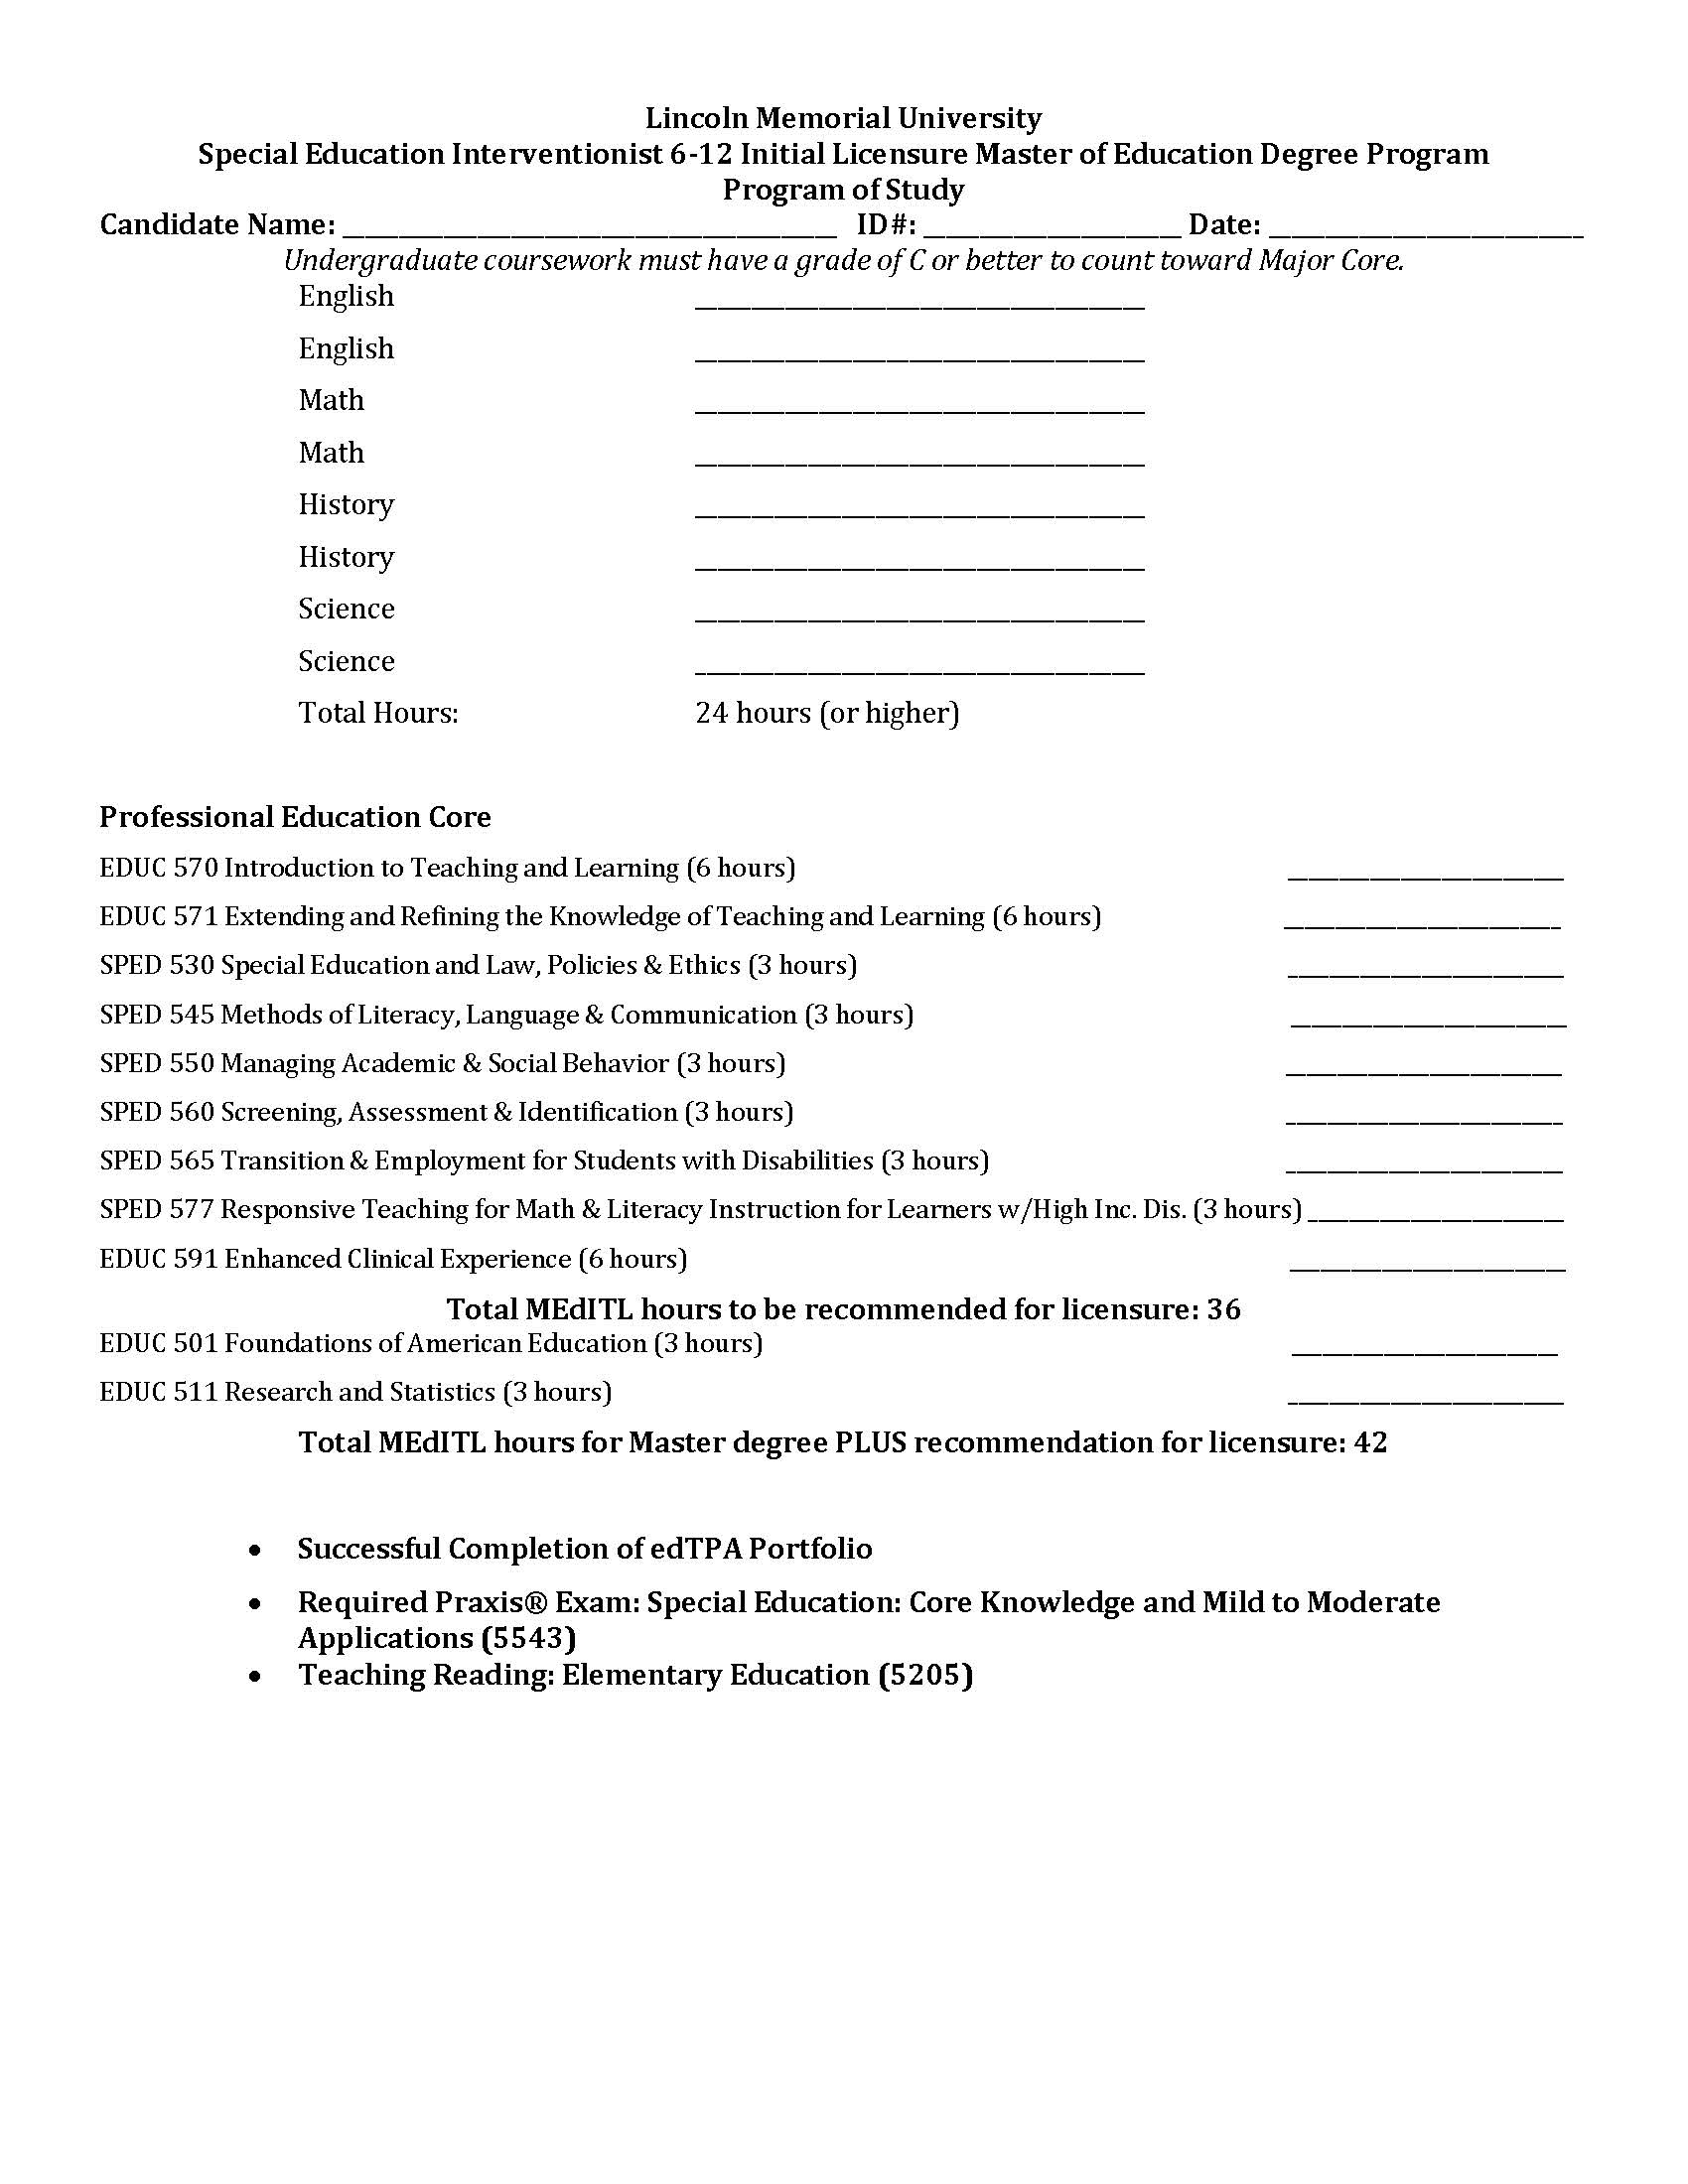 SPED Interventionist 6-12 Program of Study